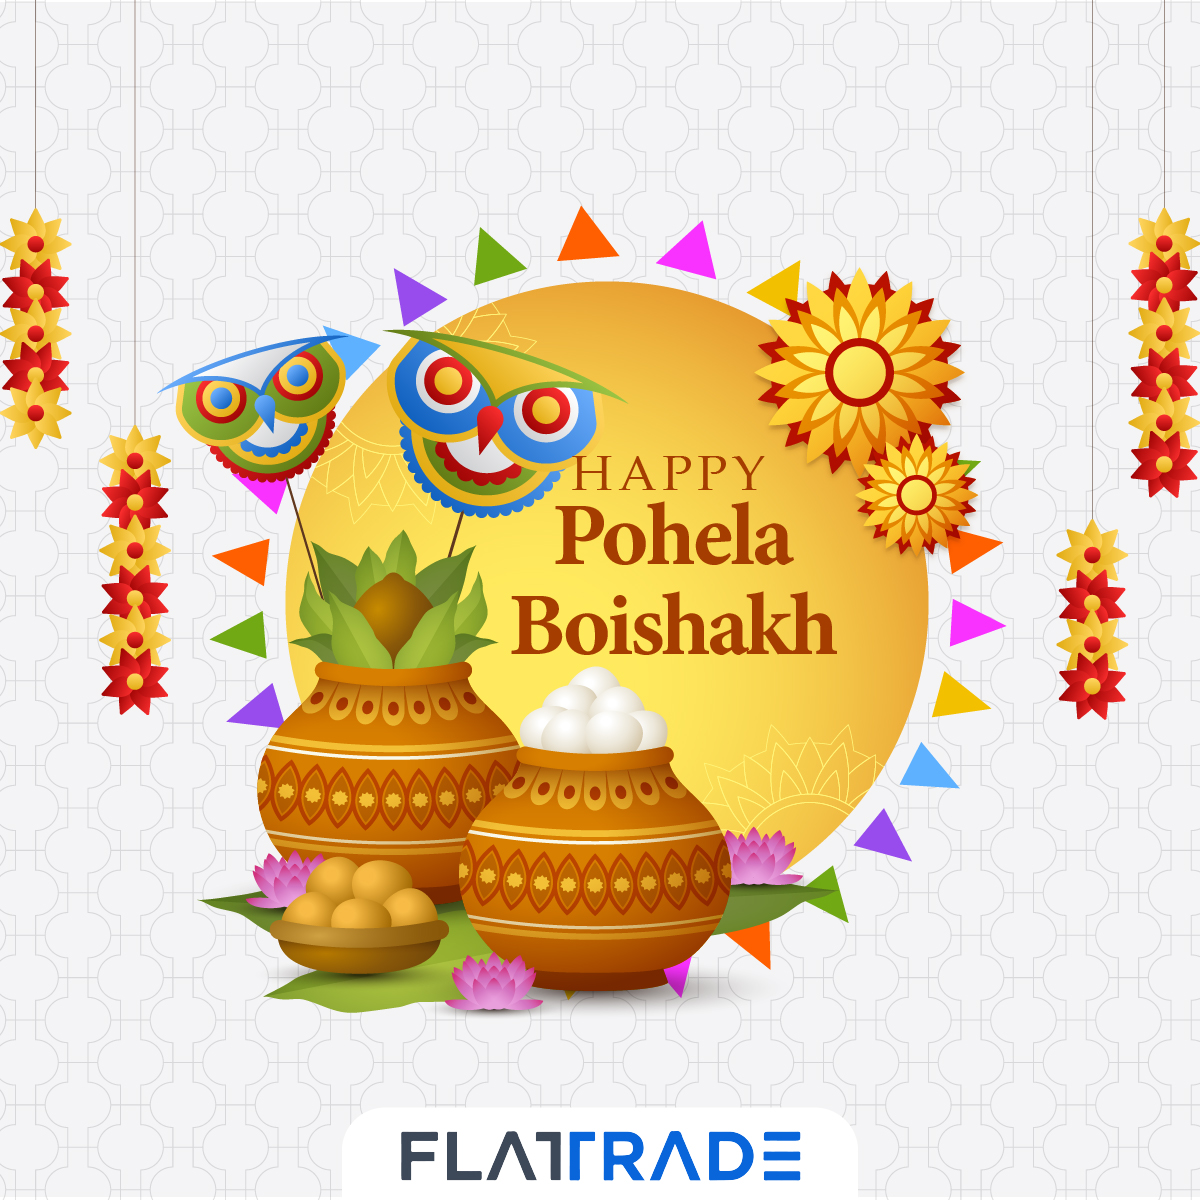 Flattrade wishes everyone a Happy Bengali New Year!!!

#BengaliNewYear #BengaliNewYear2023 #2023 #Festival #India #PohelaBoishakh